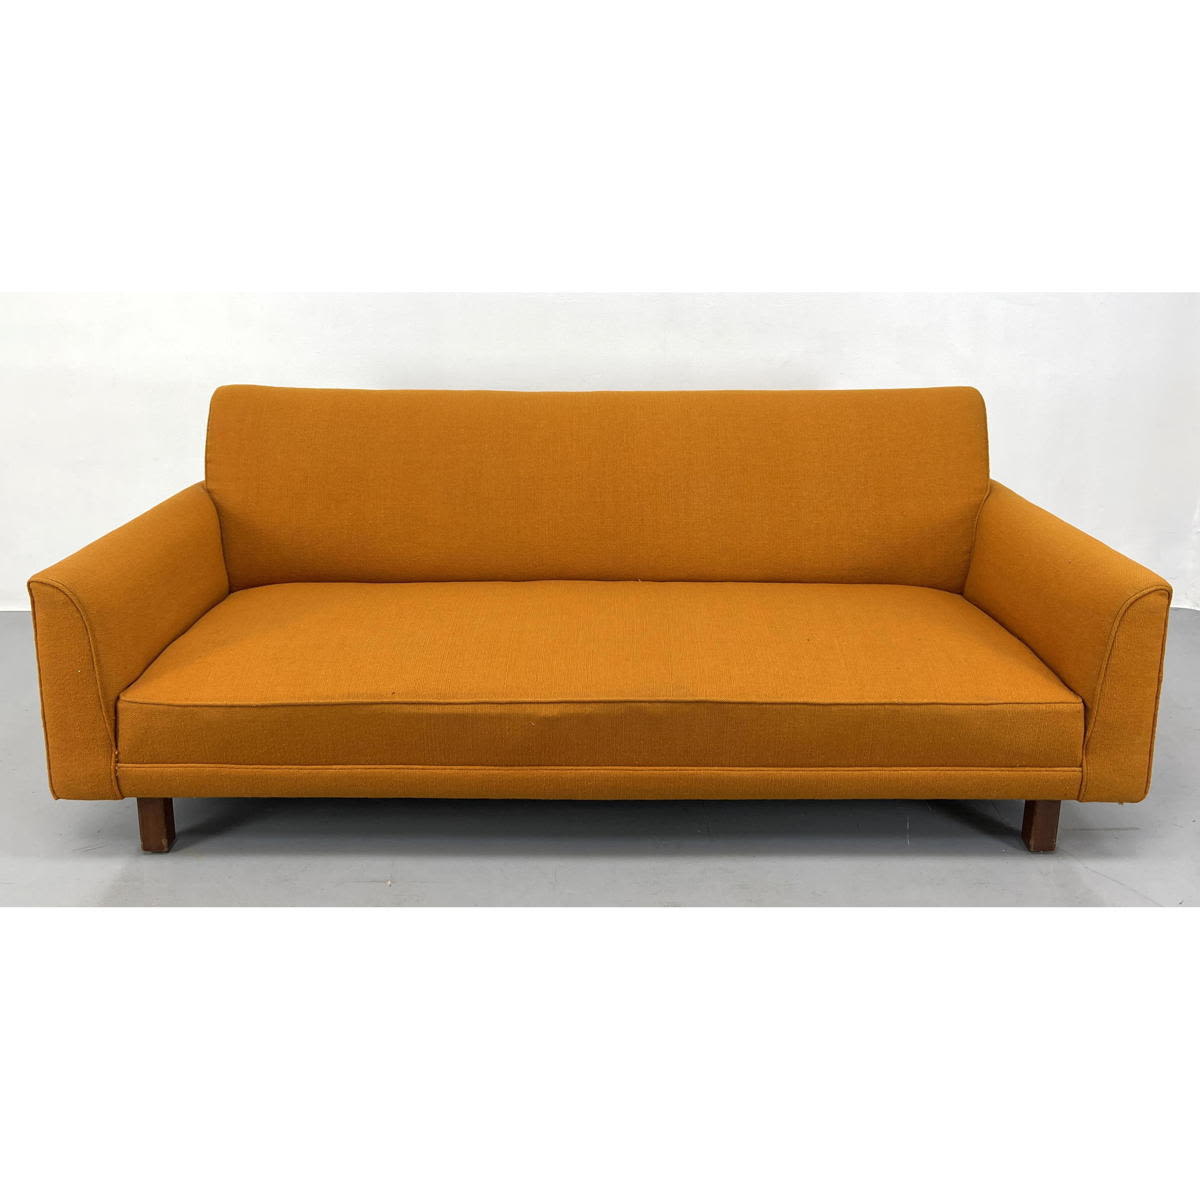 Orange Fabric Modernist Sofa Couch.